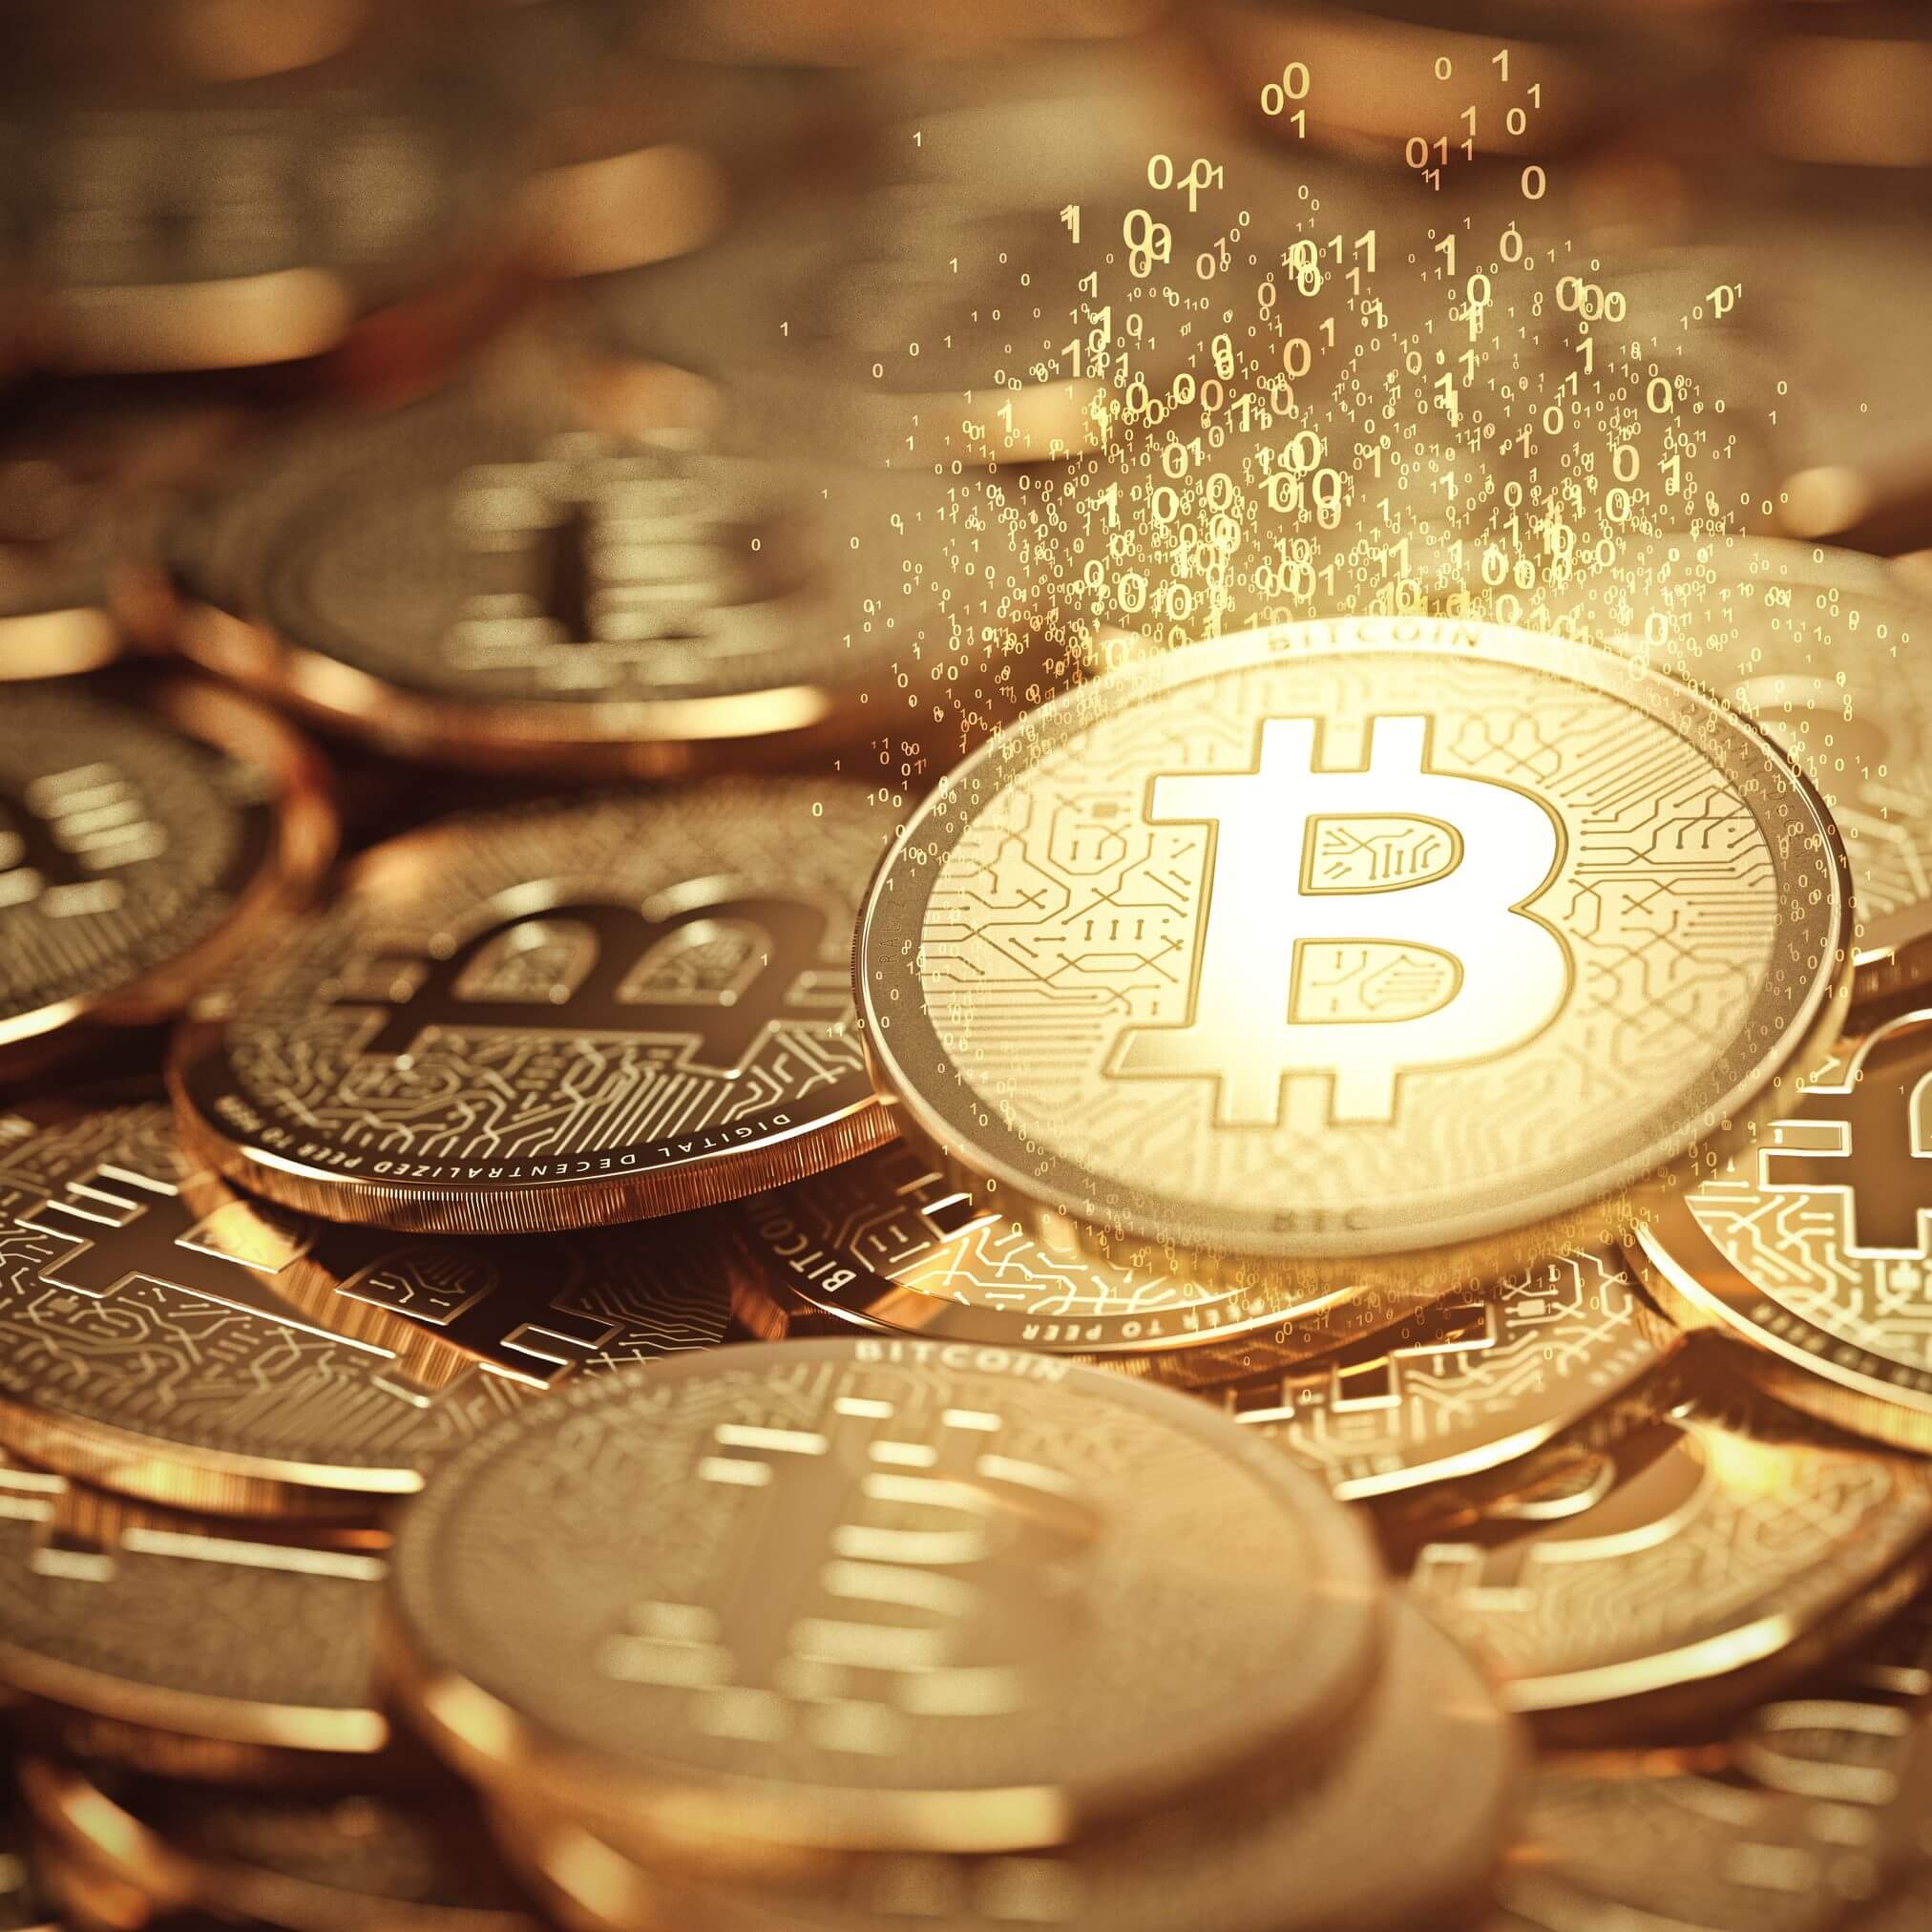 Can bitcoin cash bounce back?